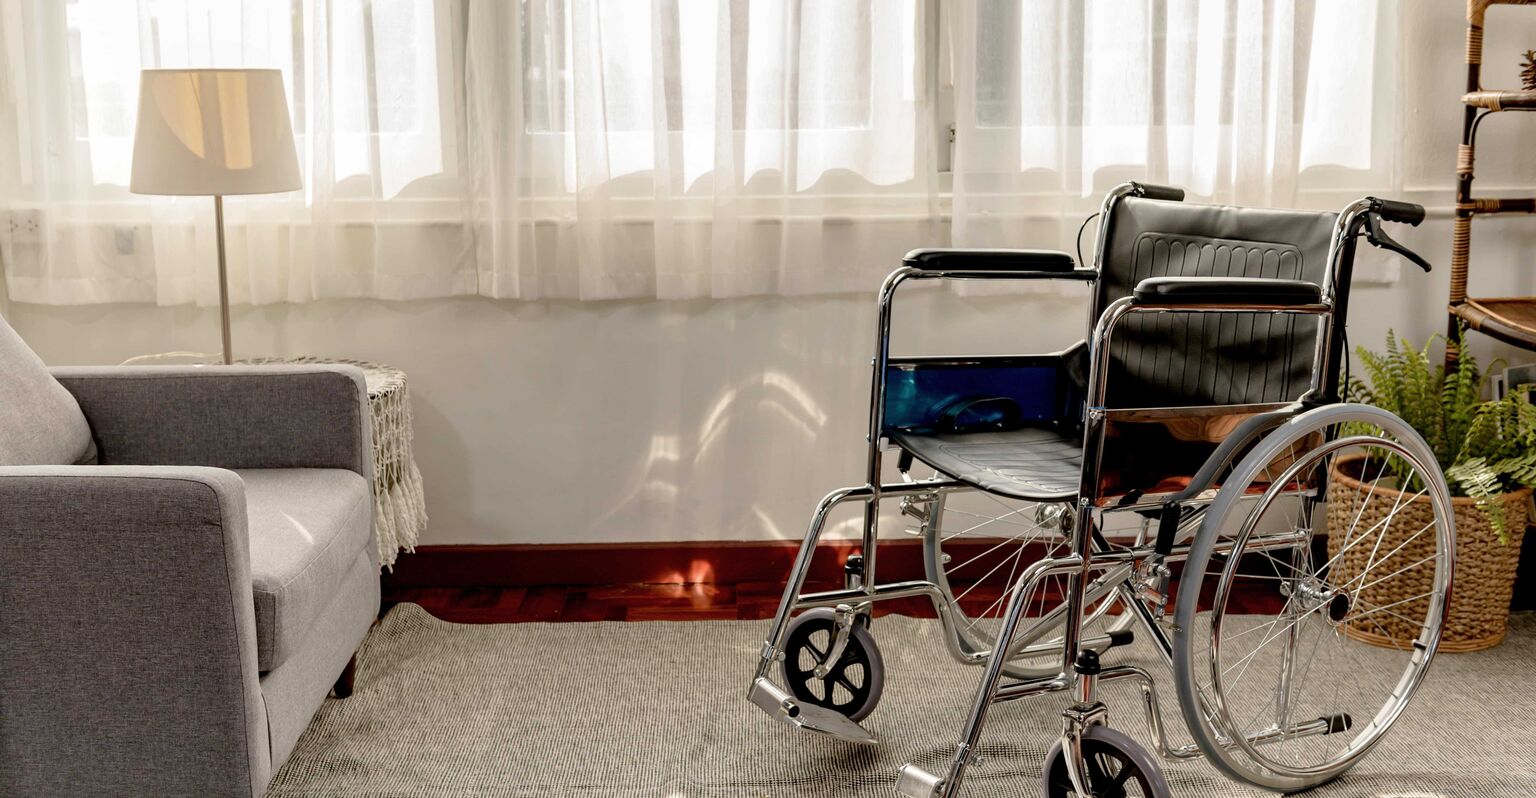 Empty wheelchair by hospital sofa